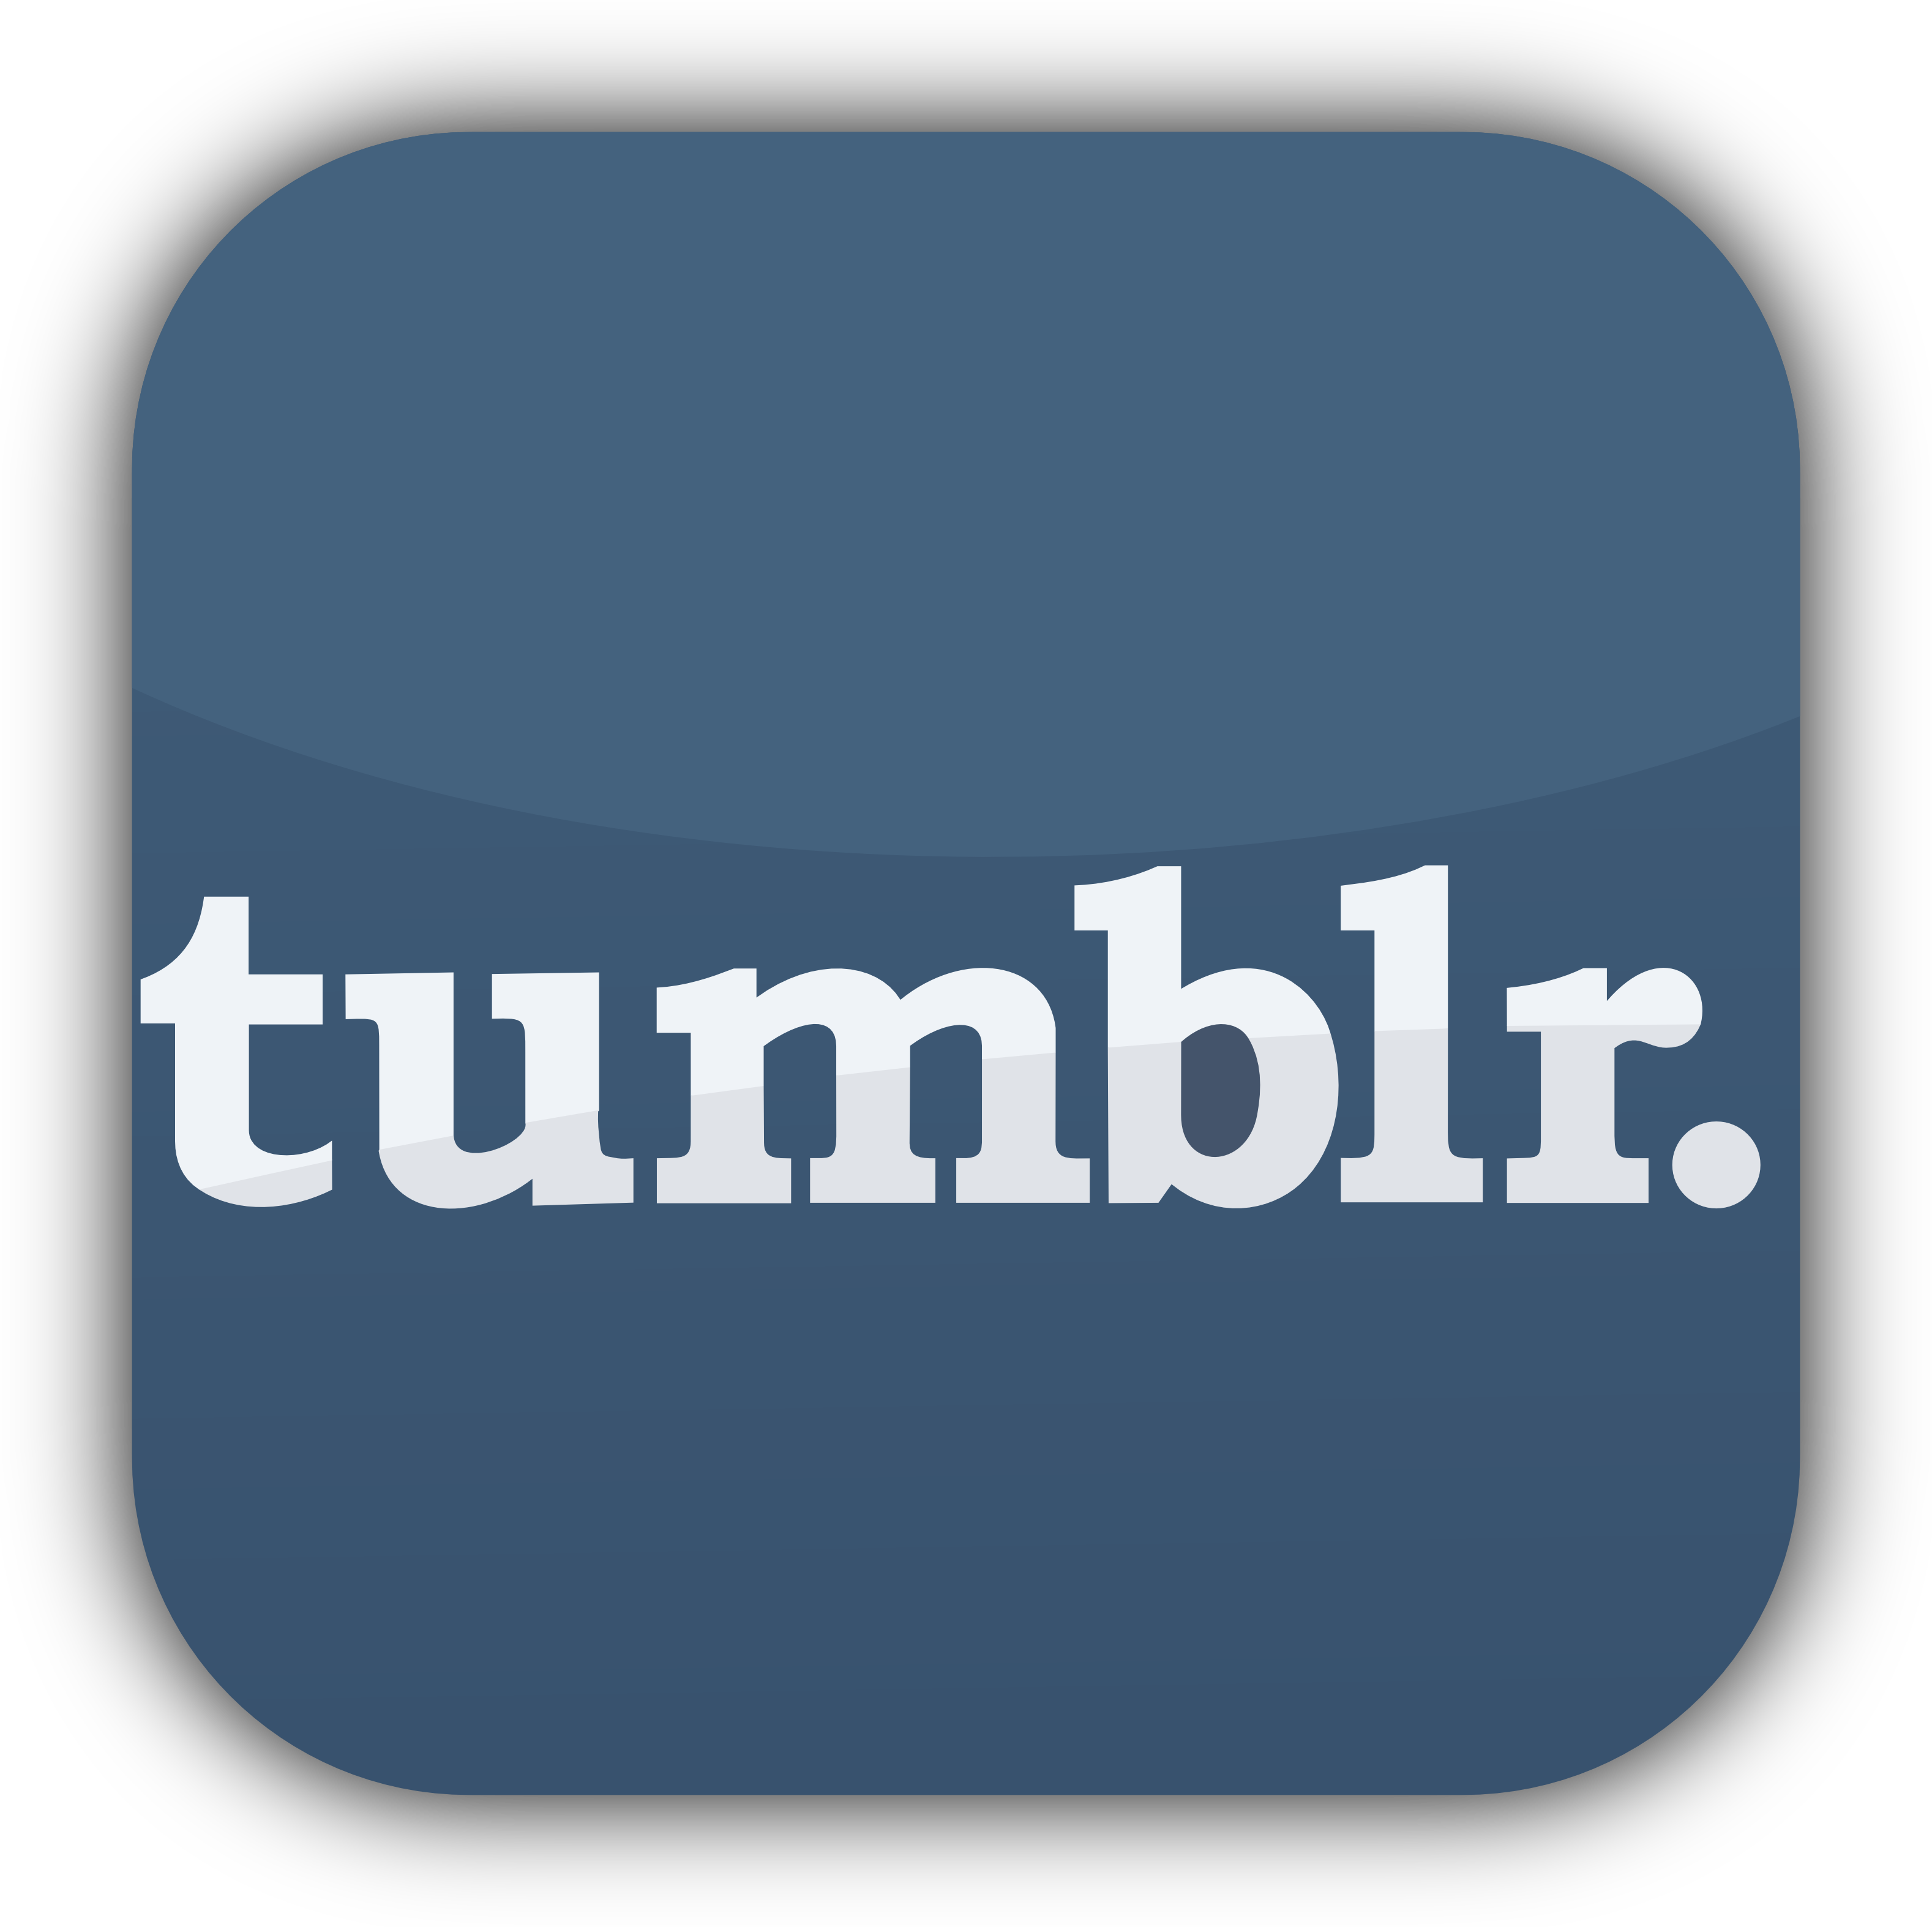 Free Tumblr Logo Png Transparent Background, Download Free Tumblr Logo Png Transparent